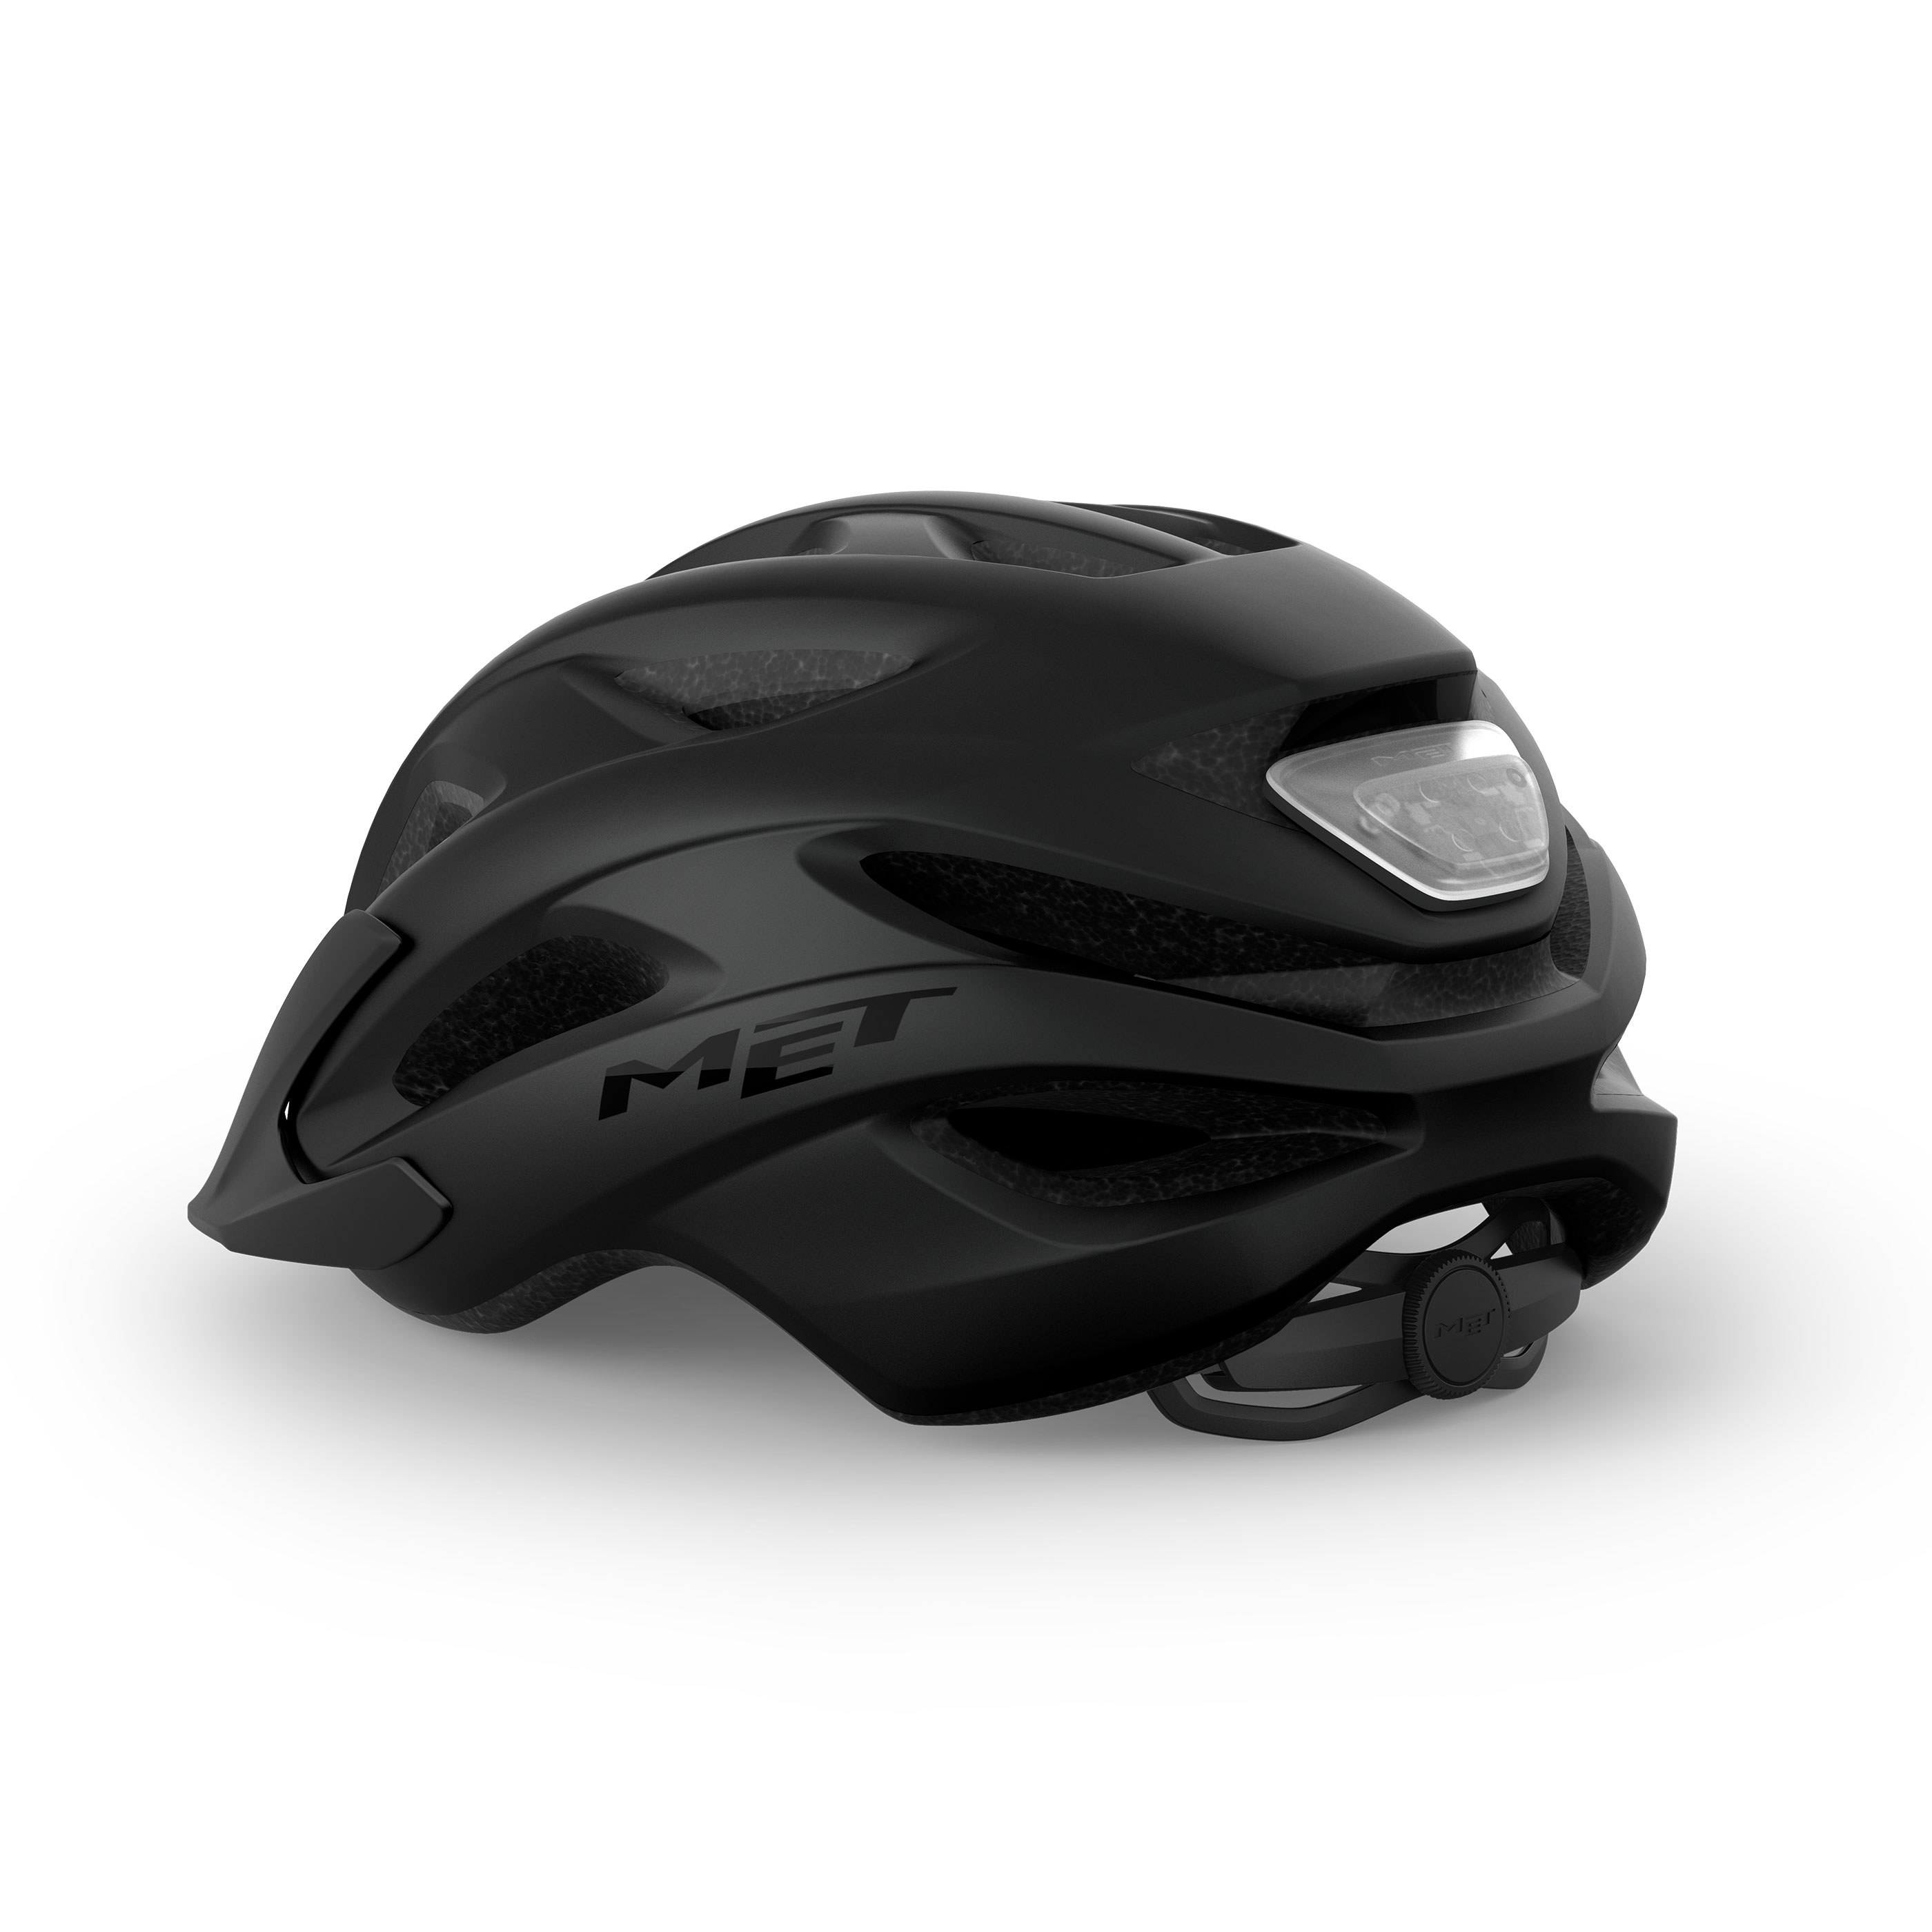 met-crossover-cycling-helmet-M149NO1-back